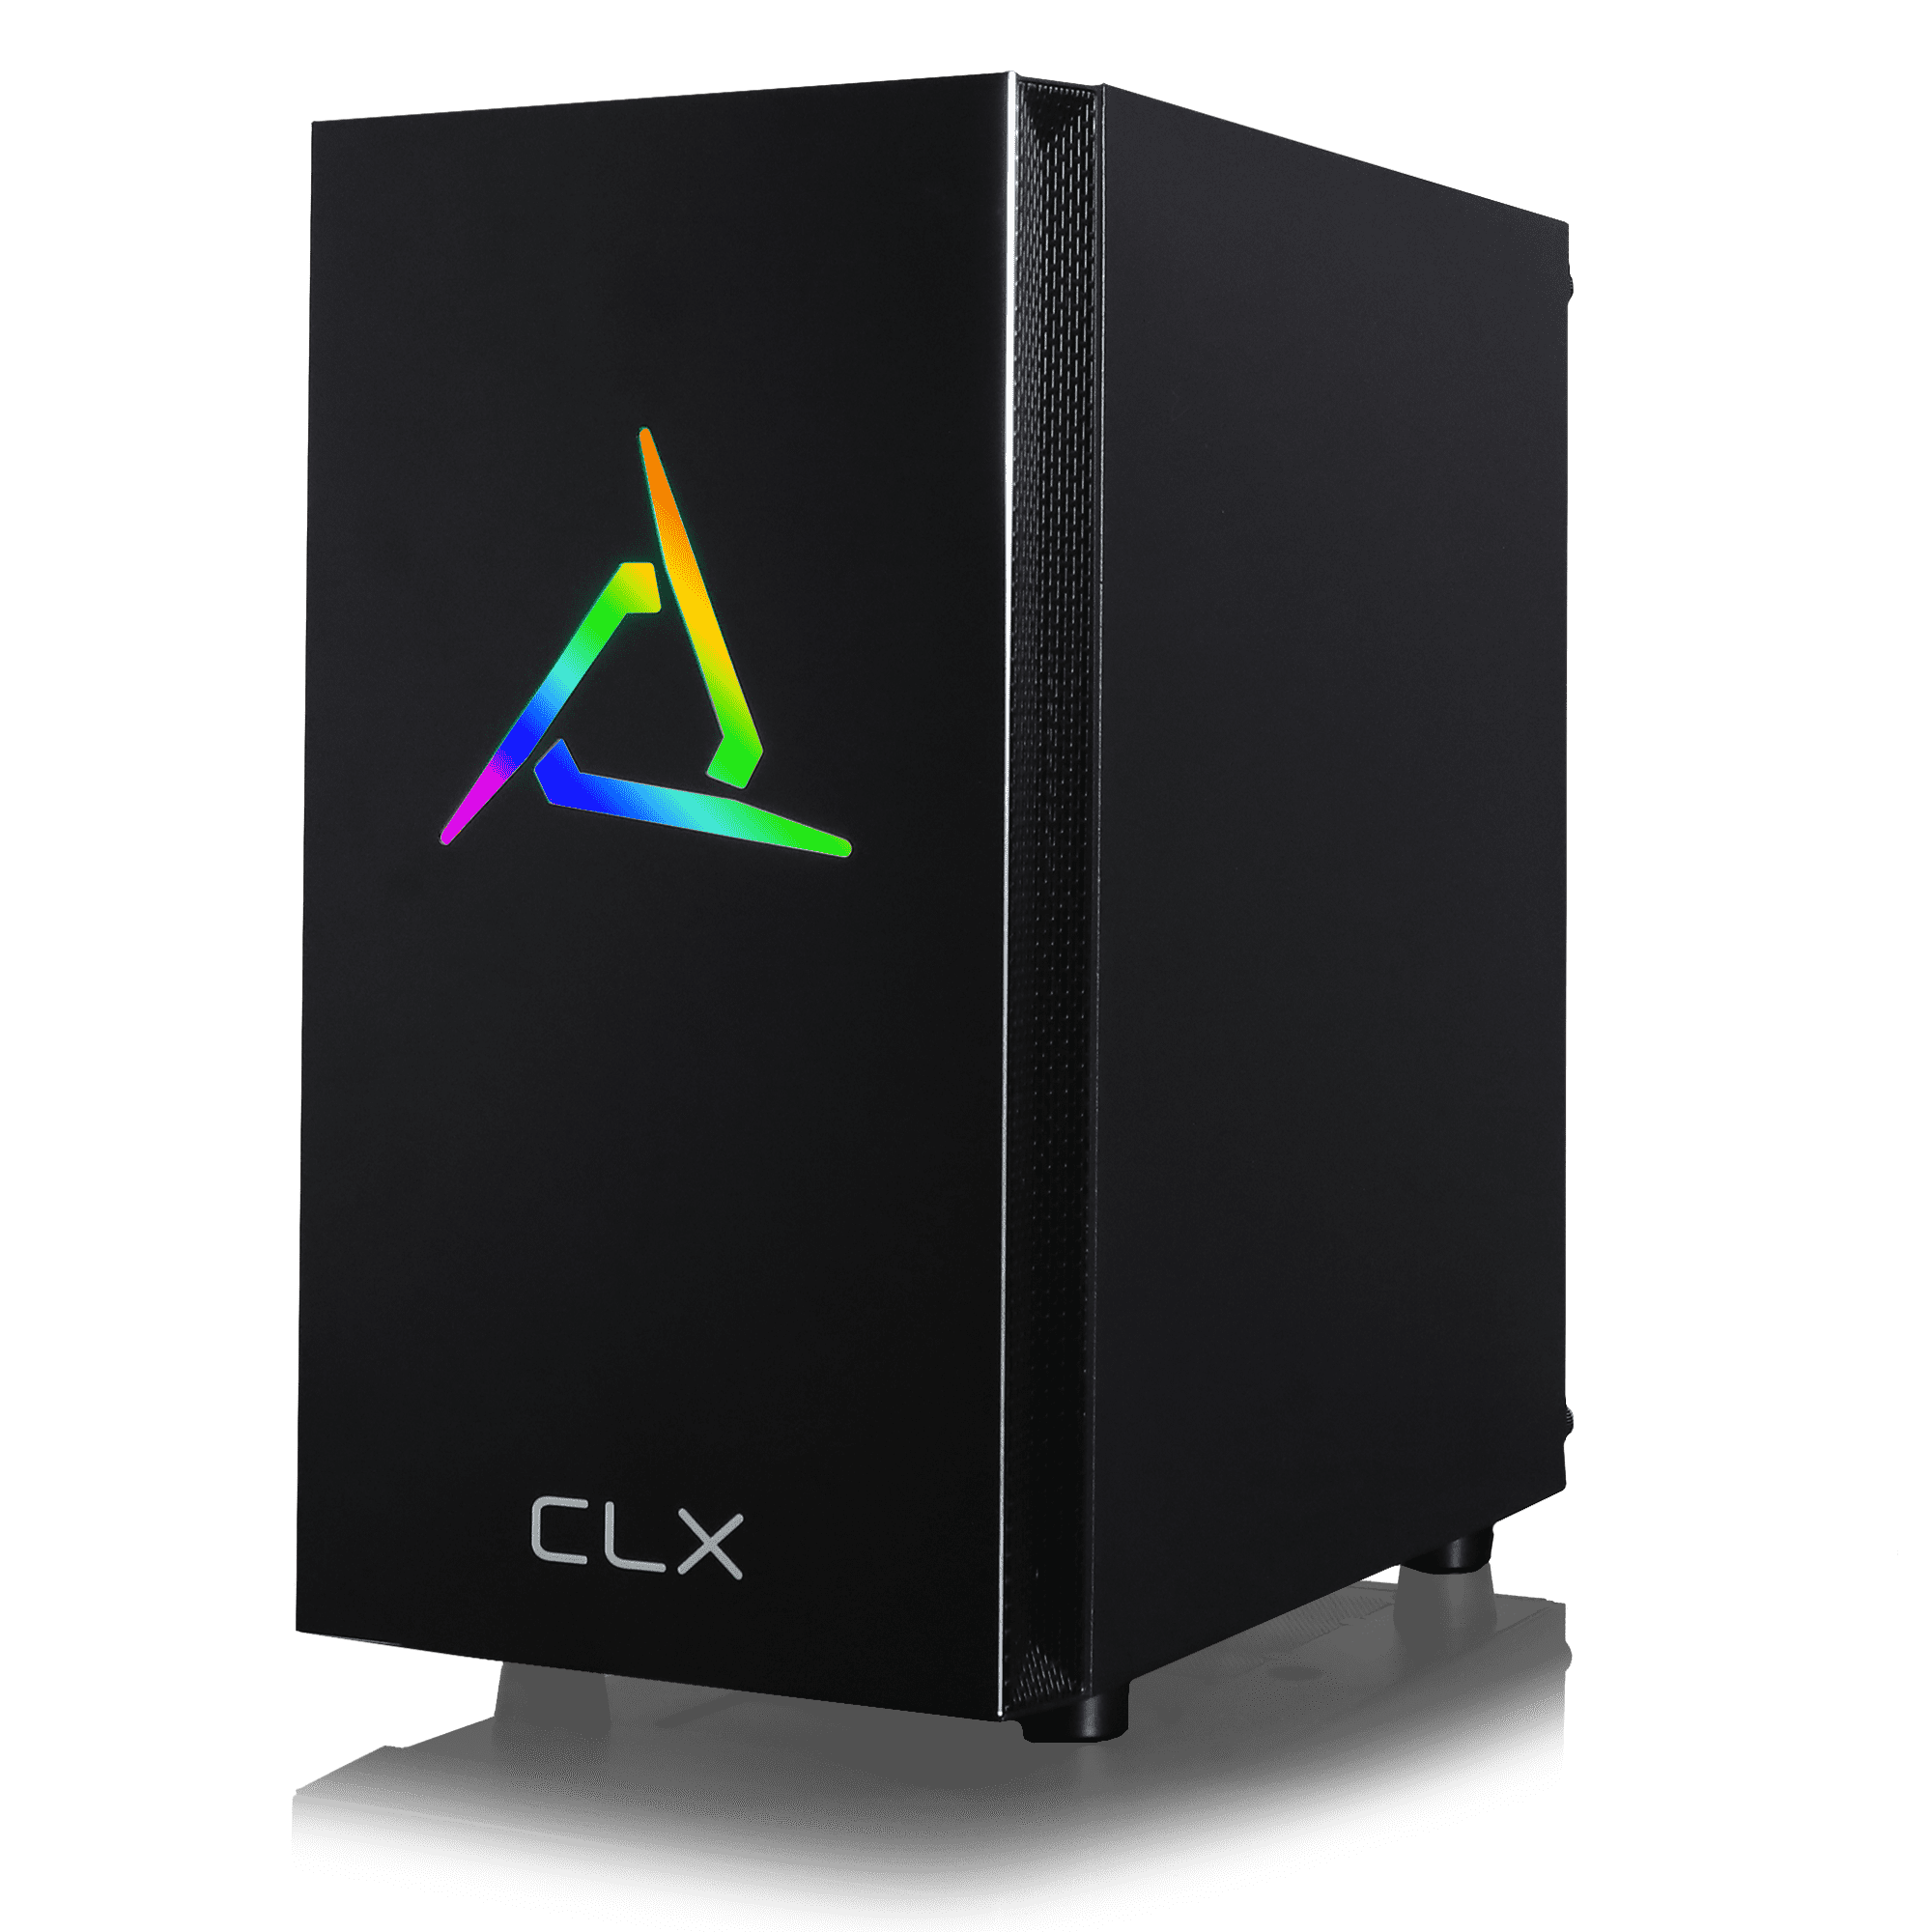 CLX SET Gaming PC - Intel Core i3 9100F 3.6GHz 4-Core, 8GB DDR4 2666,  GeForce GTX 1650 4GB, 480GB SSD, Black Mini-Tower RGB, Windows 10 Home